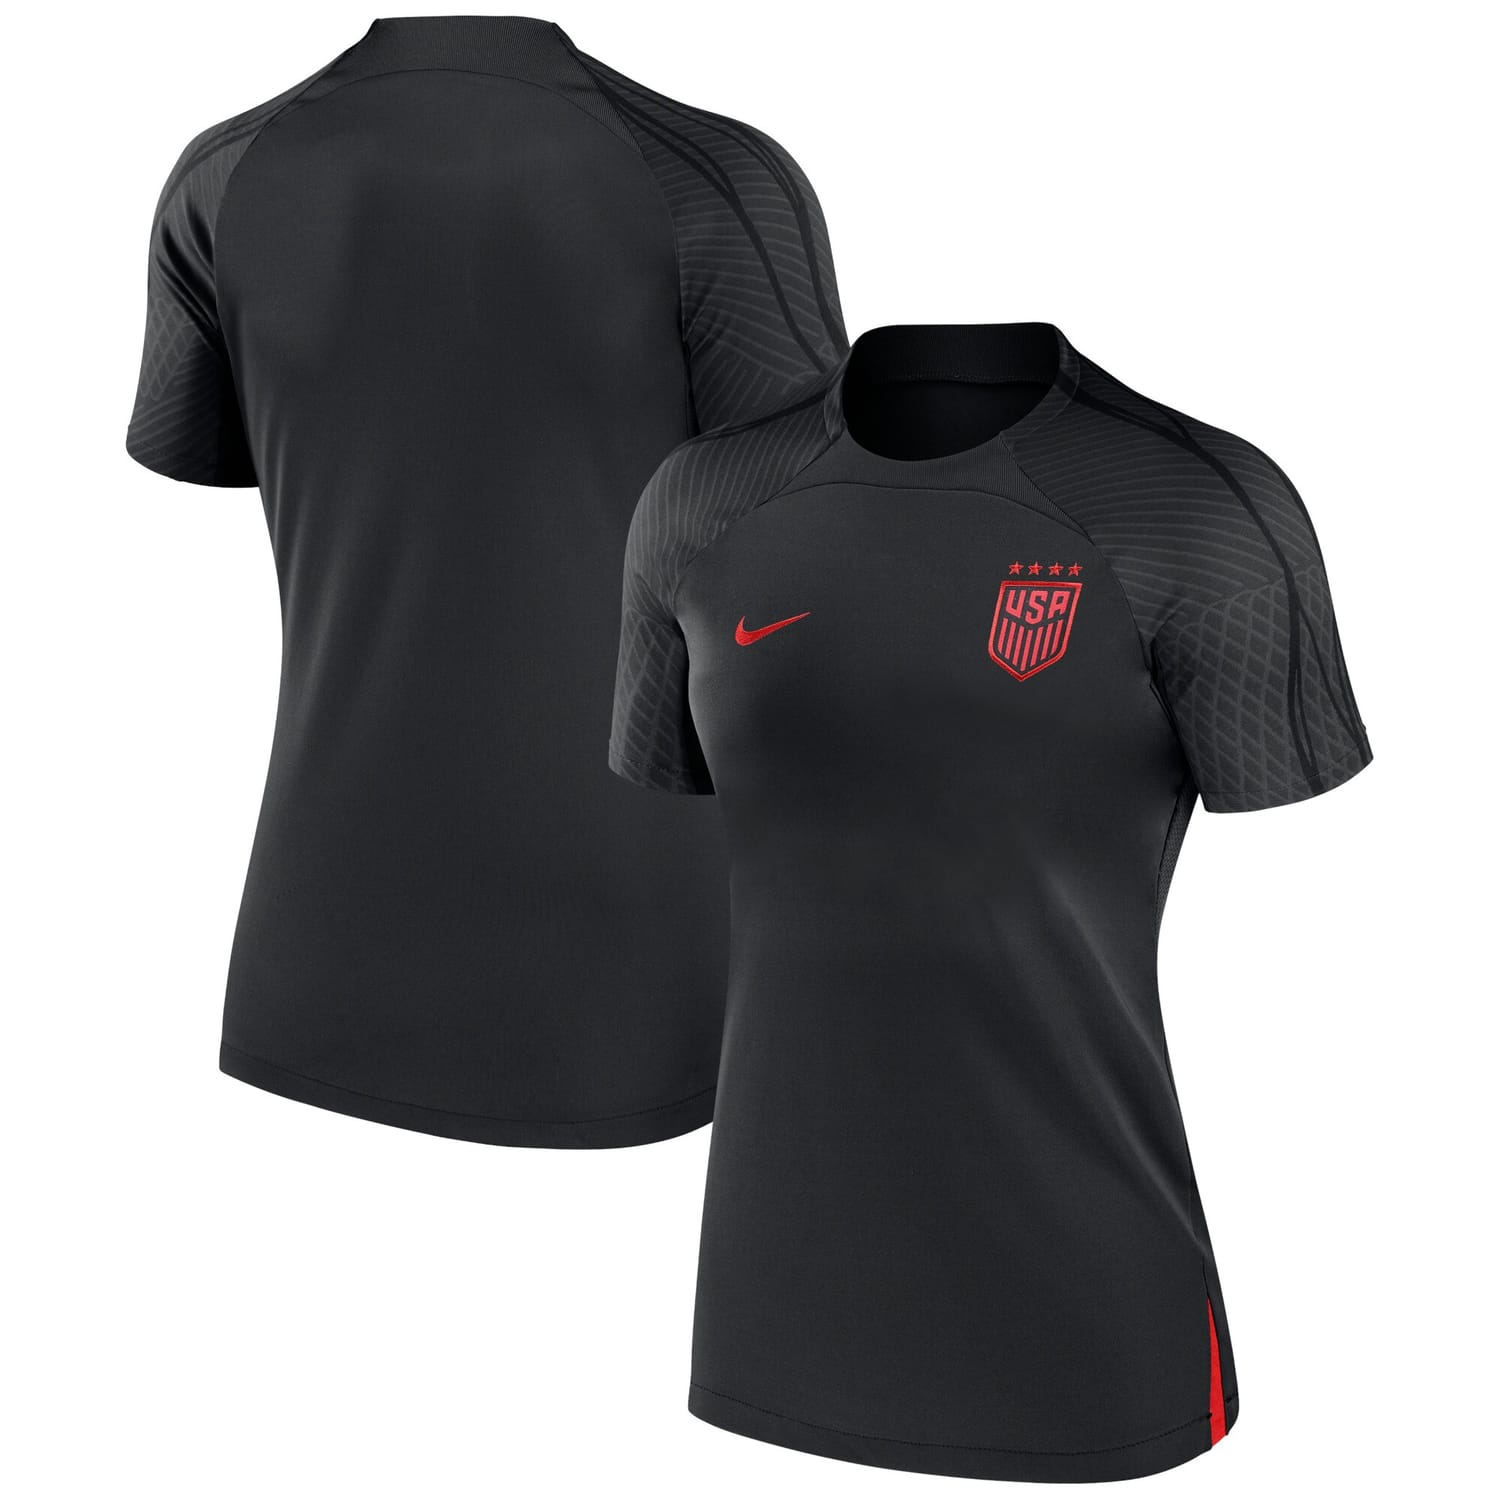 USWNT Training Jersey Shirt Black for Women